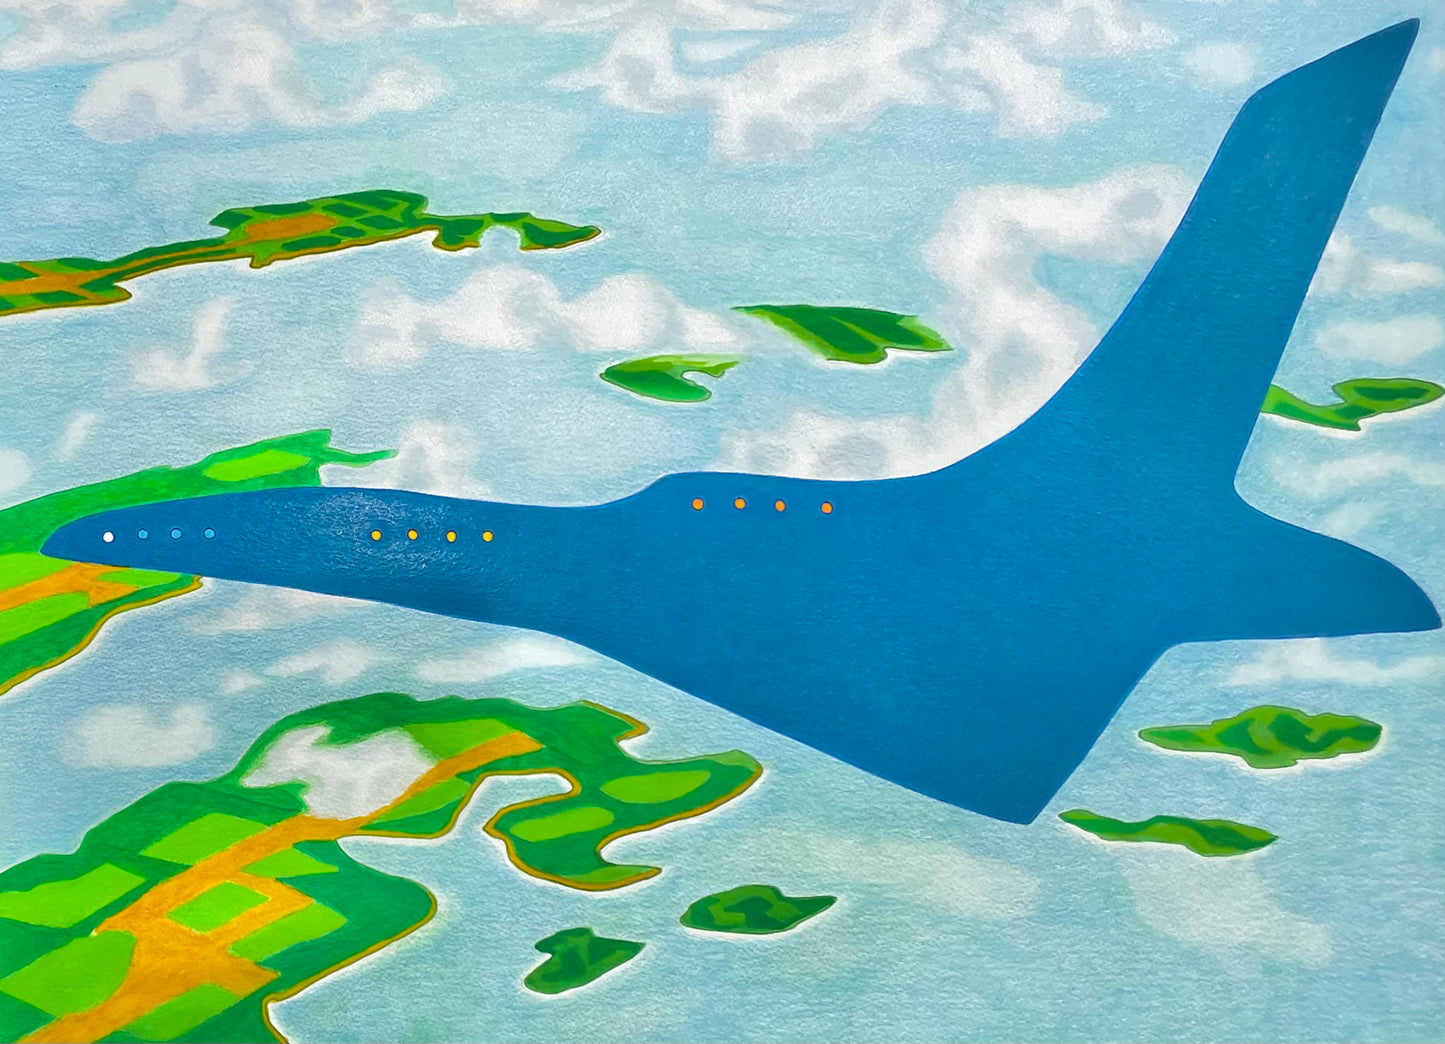 Blue Plane Special Print by Kevin J Harper